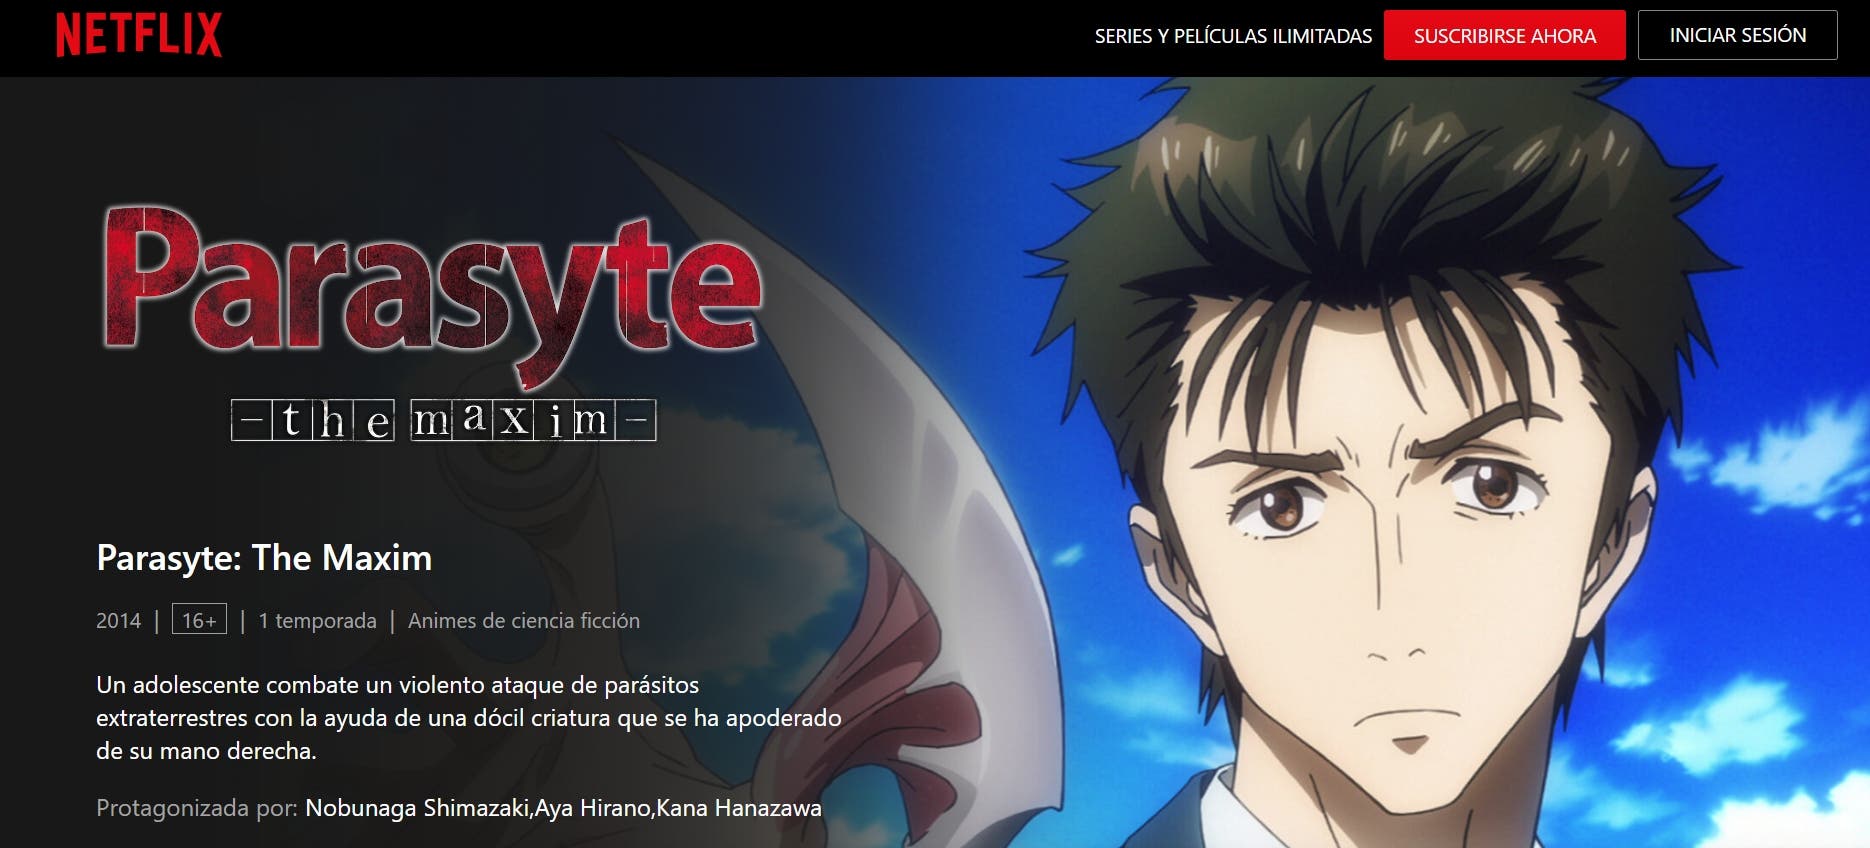 Parasyte (Kiseiju): dónde ver todo el anime al completo